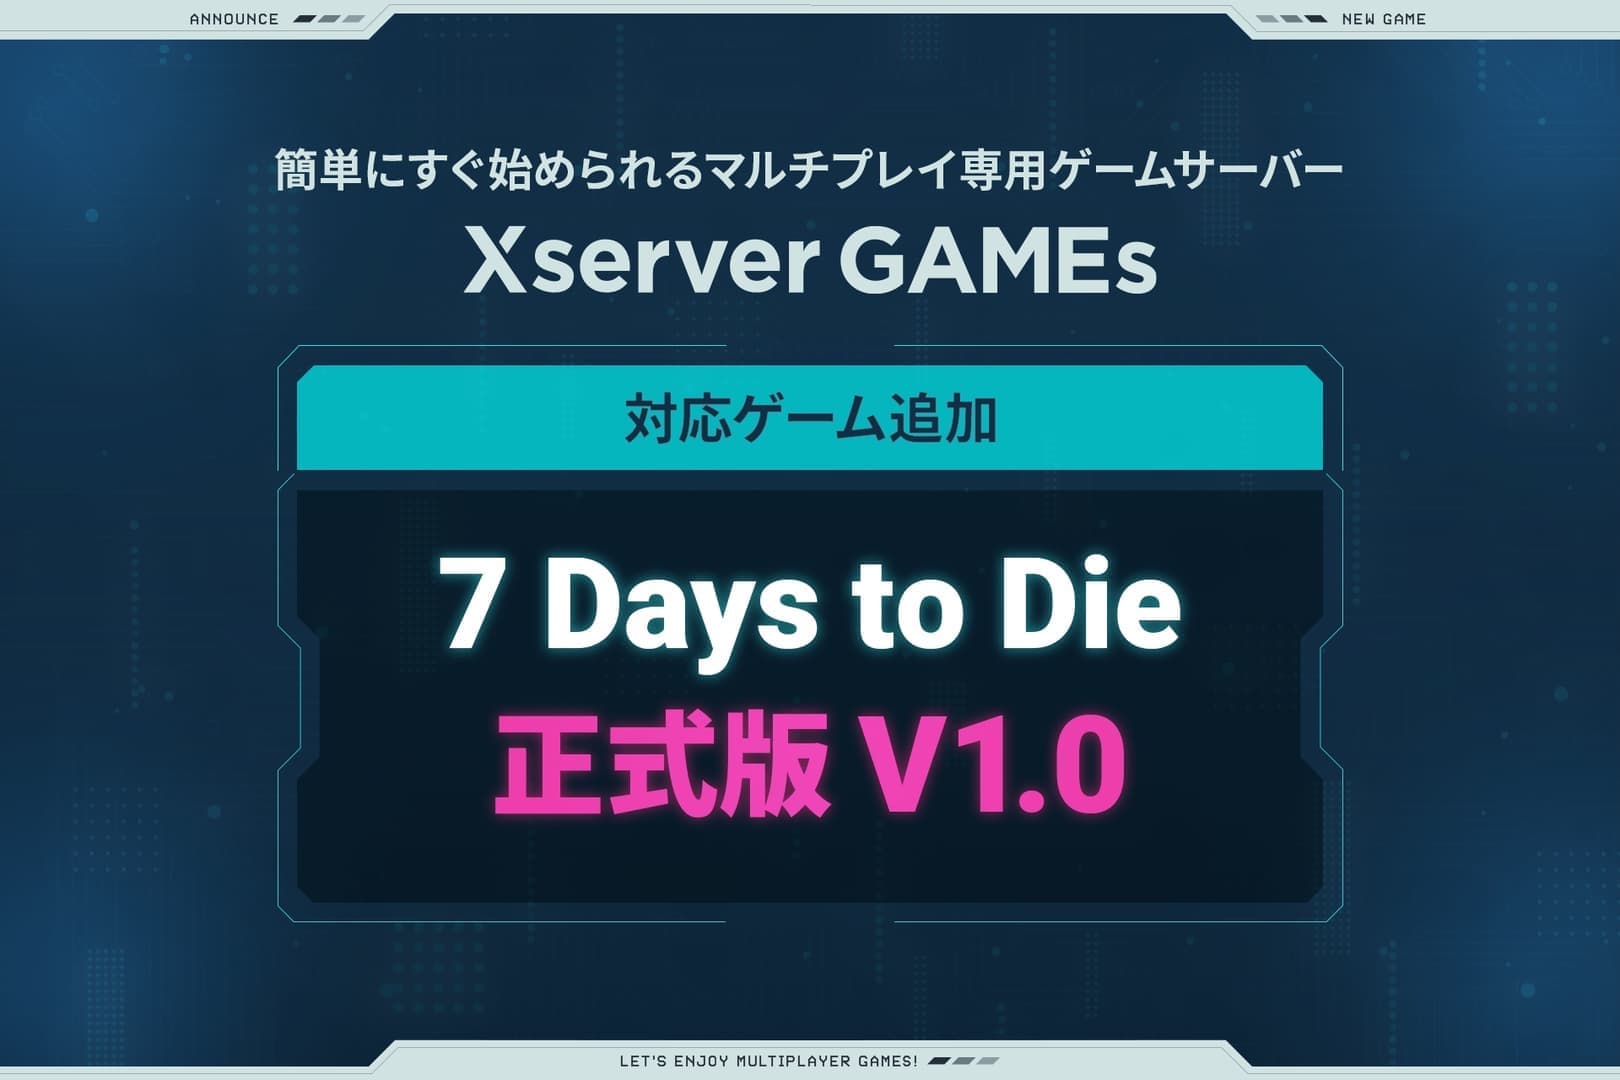 『7 Days to Die』正式版(V1.0)がマルチプレイ専用サーバー「Xserver GAMEs」の対応ゲームに追加_001